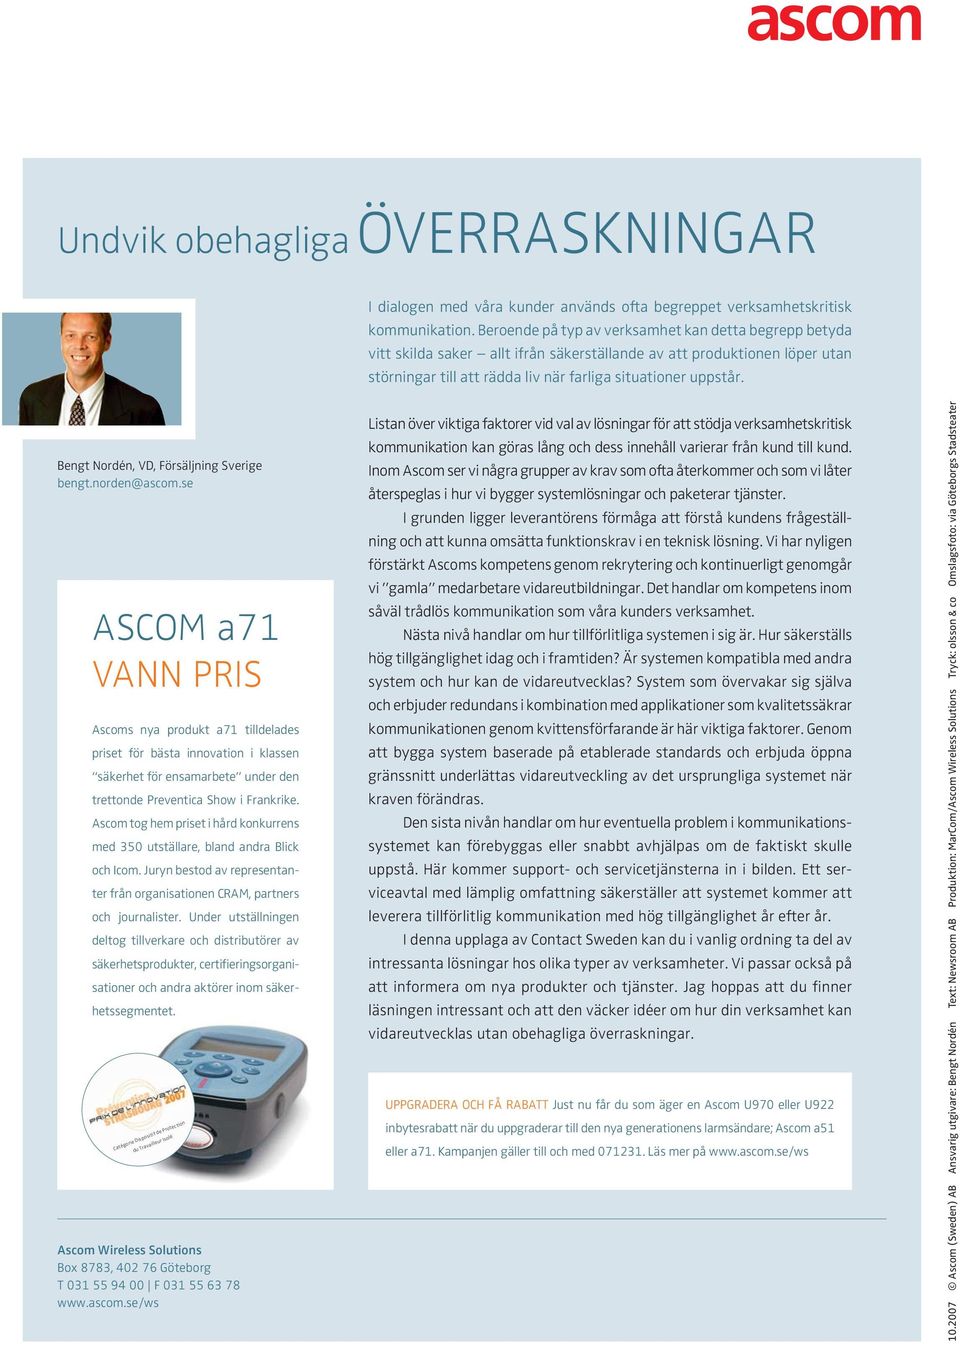 Bengt Nordén, VD, Försäljning Sverige bengt.norden@ascom.